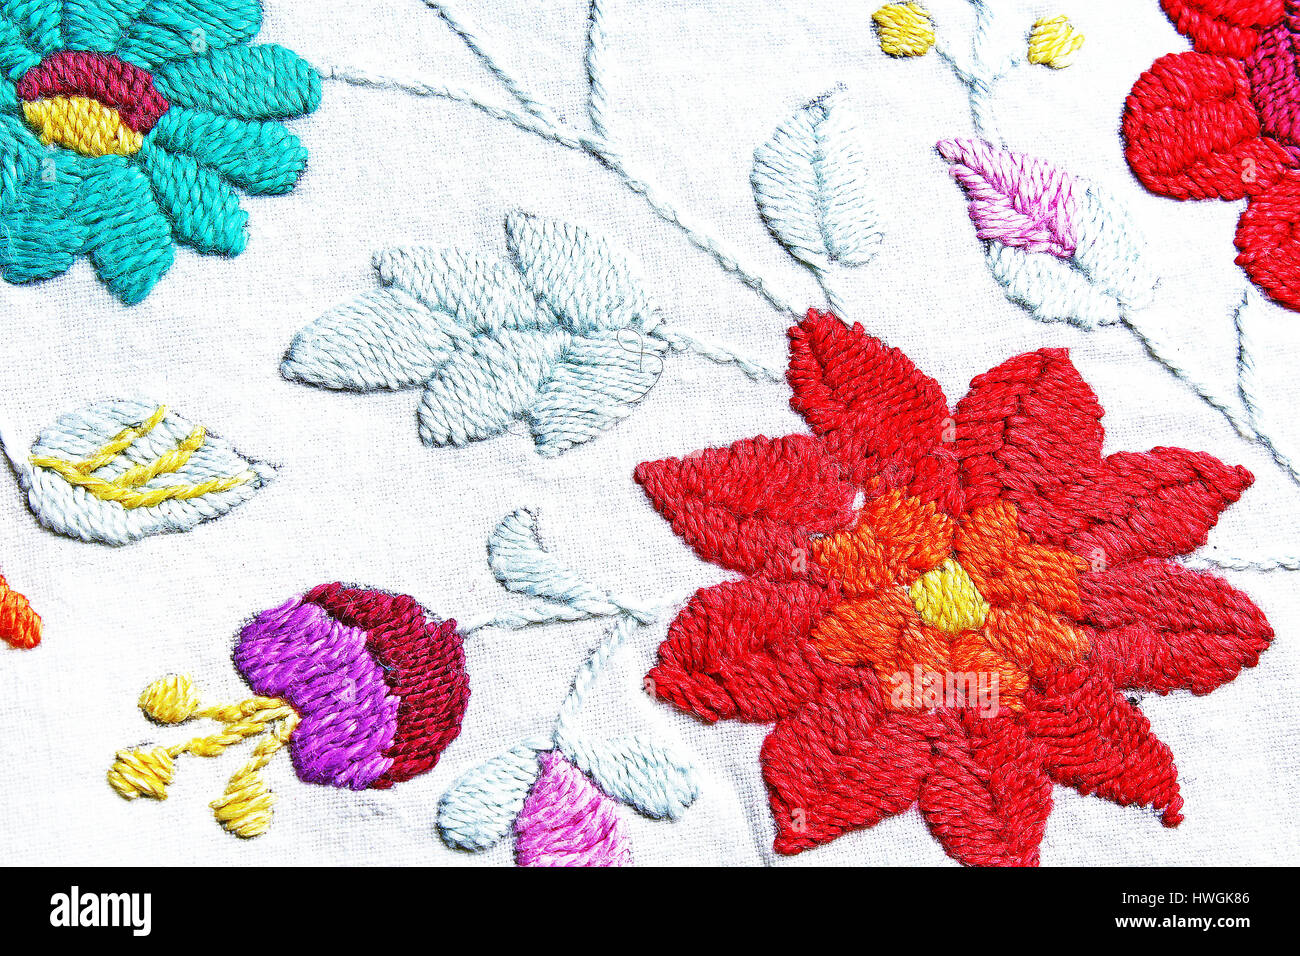 Embroidery hand made tapestry studio photo. Embroidery hand work hobby broidery woolwork. Beautiful hobby. Stock Photo